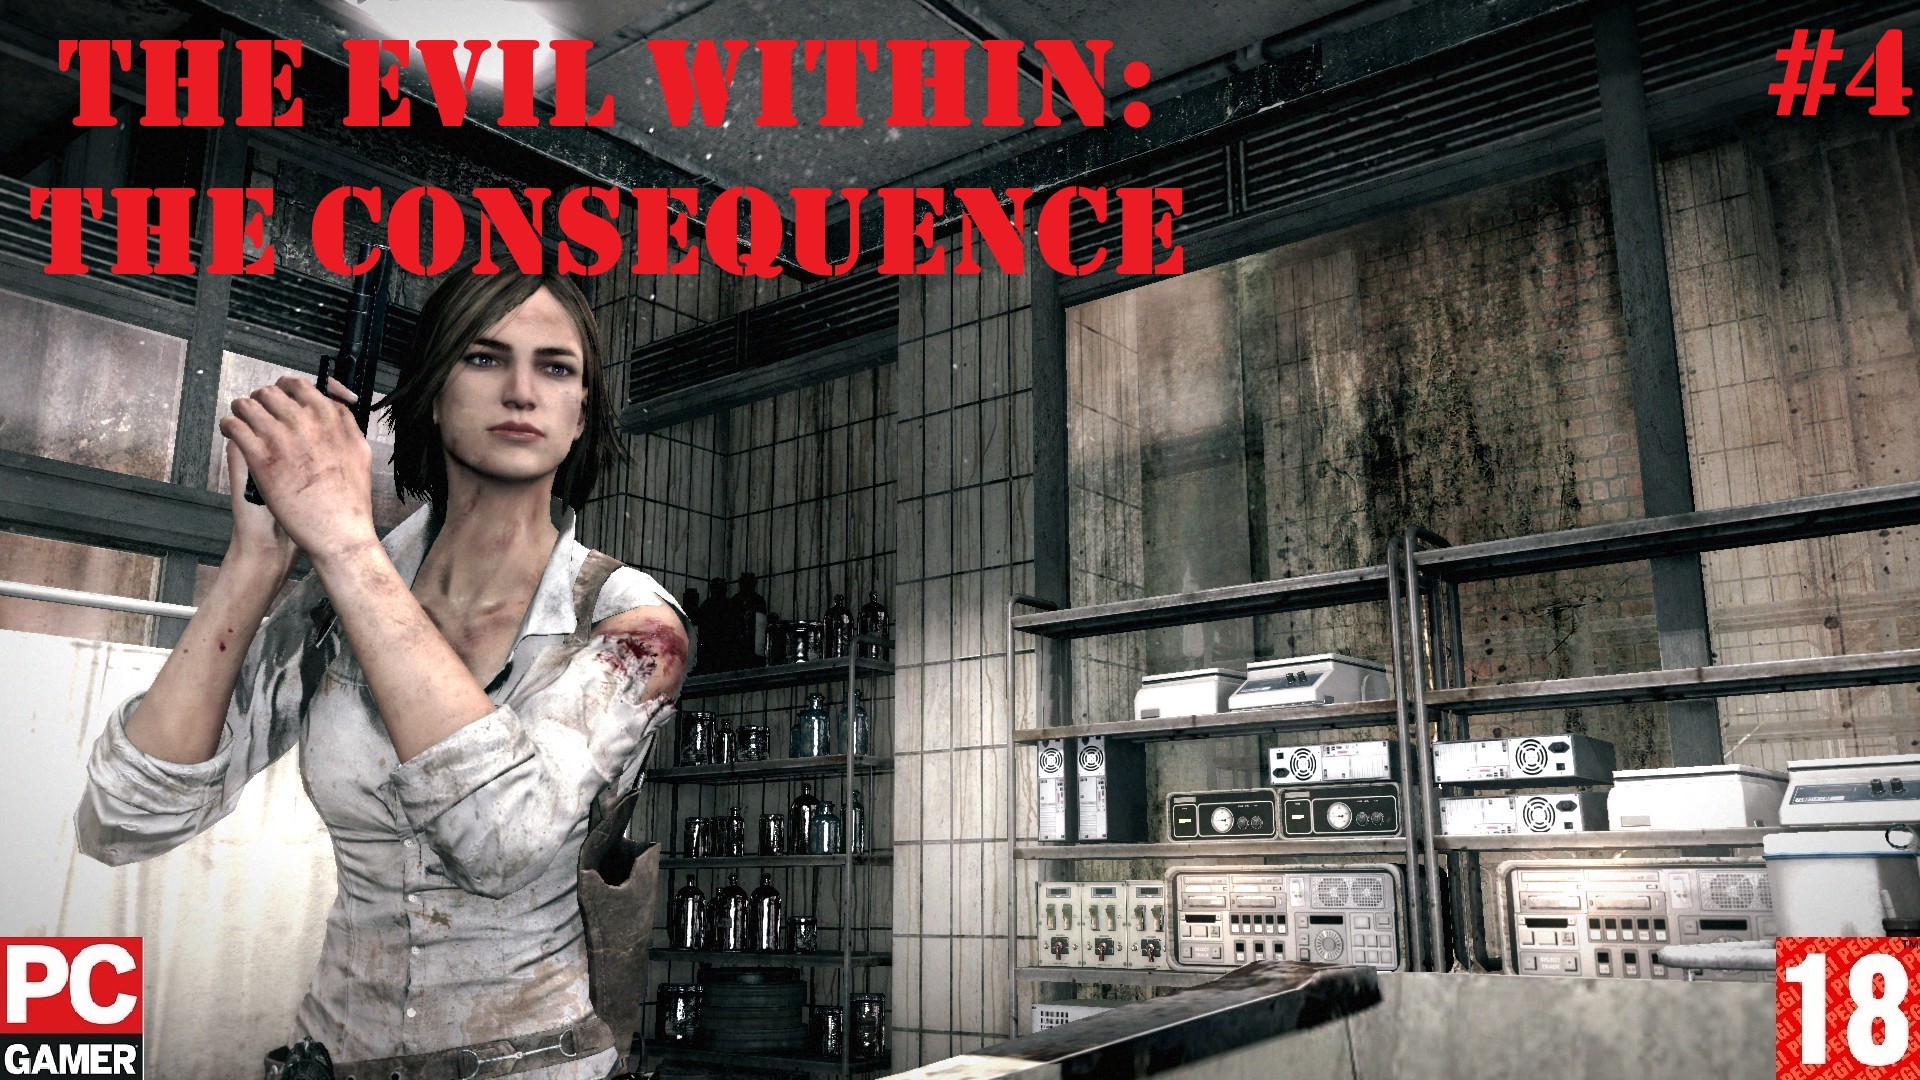 The Evil Within :The Consequence(PC) - Прохождение #4, DLC. (без комментариев) на Русском.